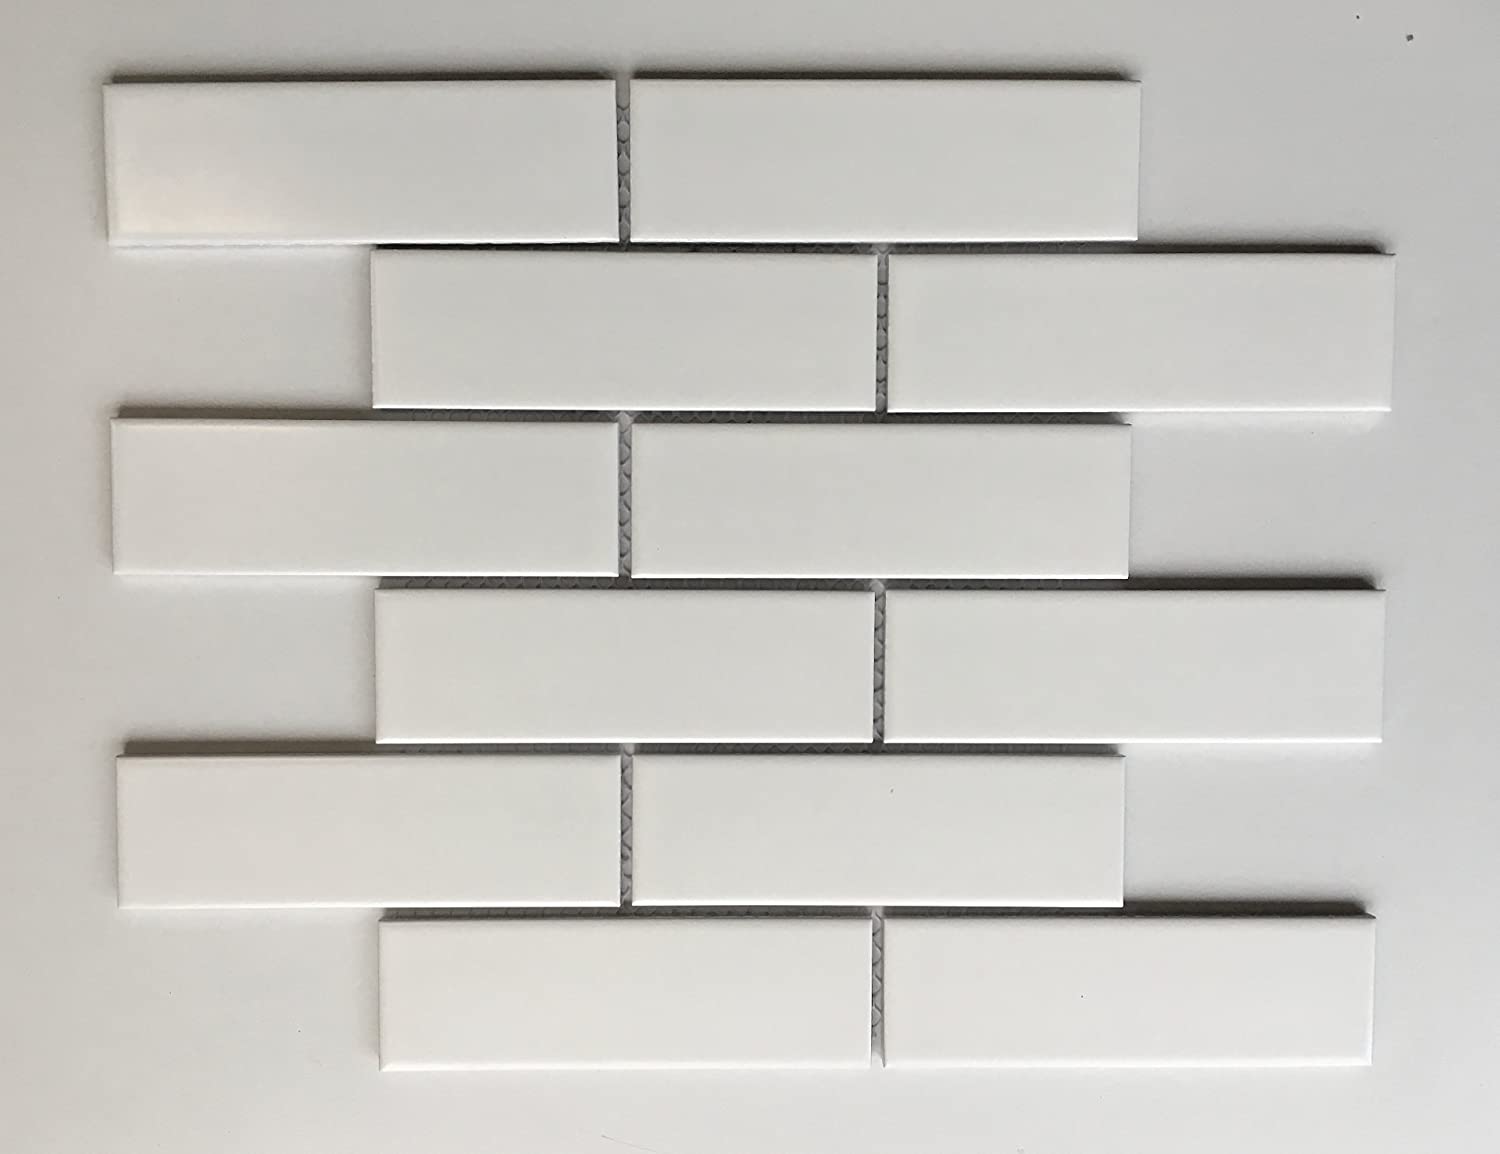 2" X 6"  White Porcelain Brick Mosaic Tile - Matte Finish , Wall Tile, Backsplash Tile, Bathroom Tile (Box of 15 Sheets)